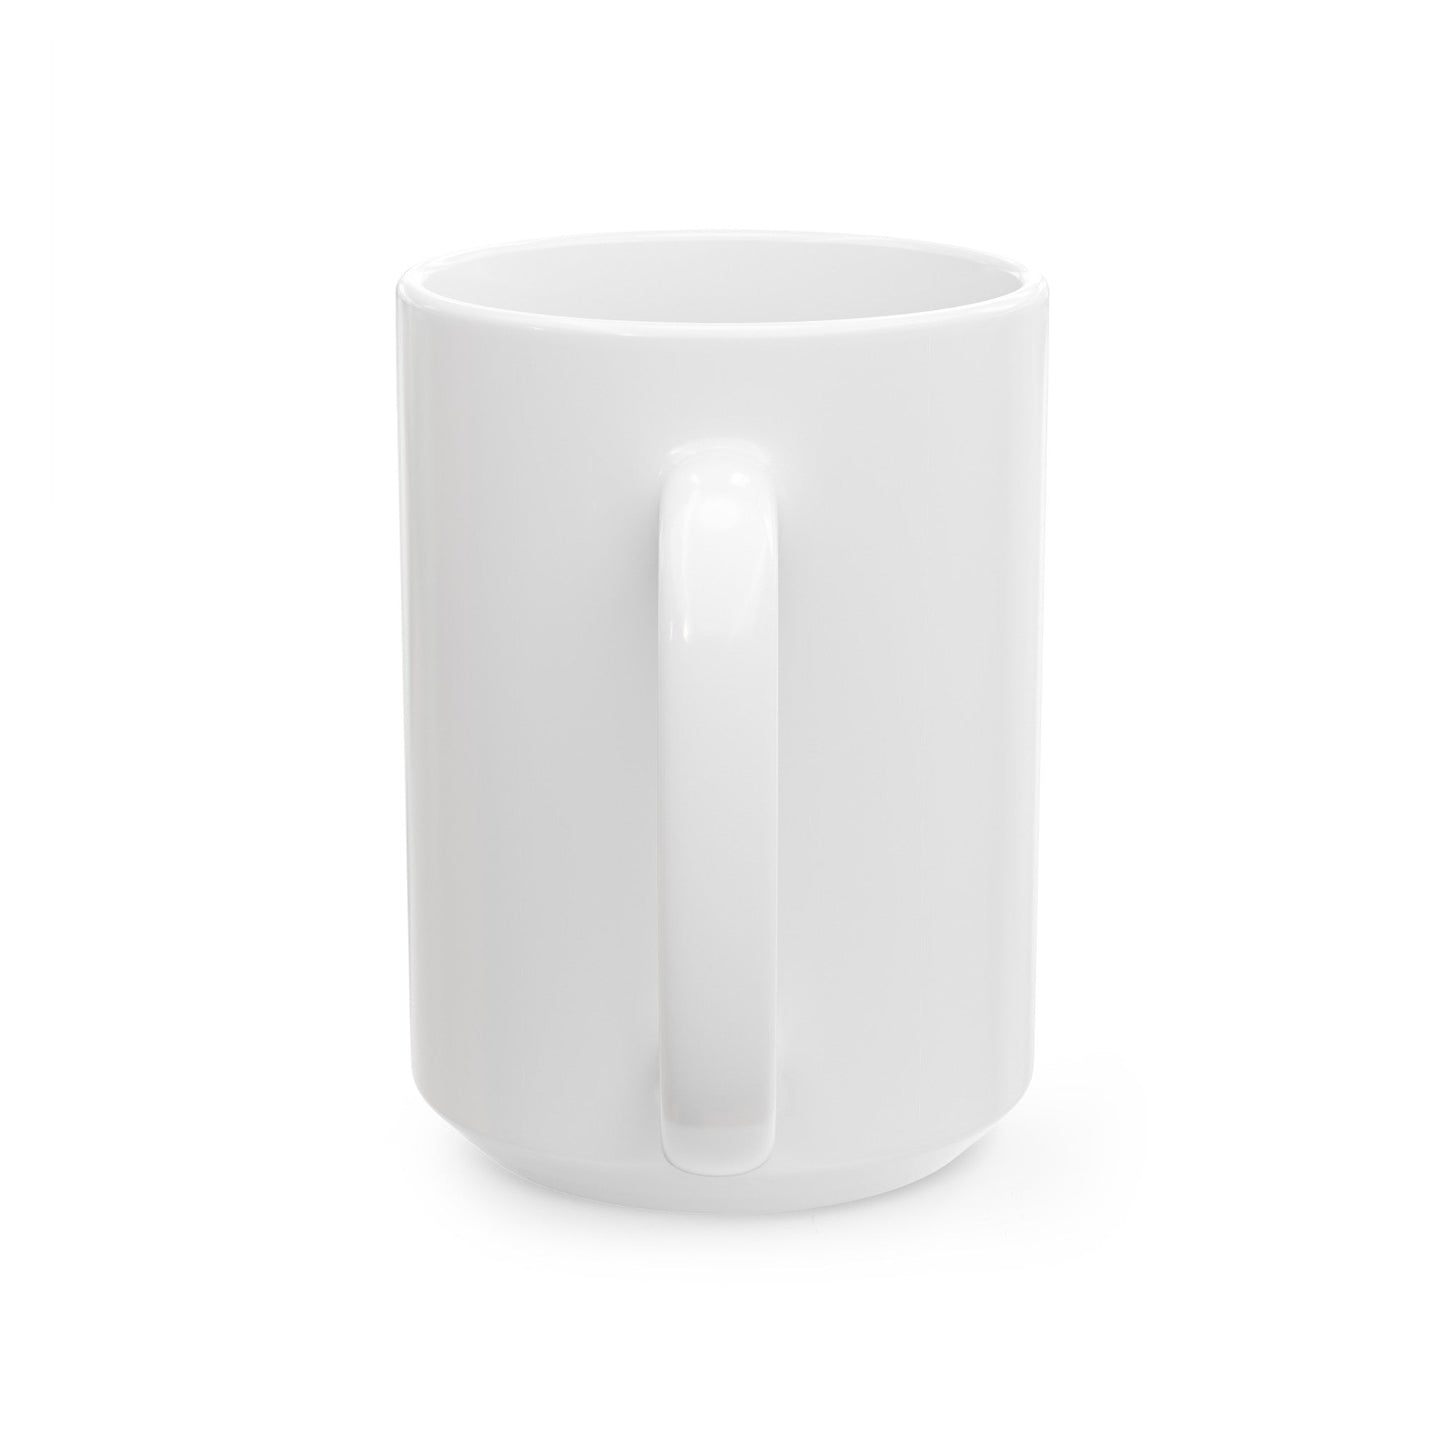 COM NAVIFOR (U.S. Navy) White Coffee Mug-The Sticker Space